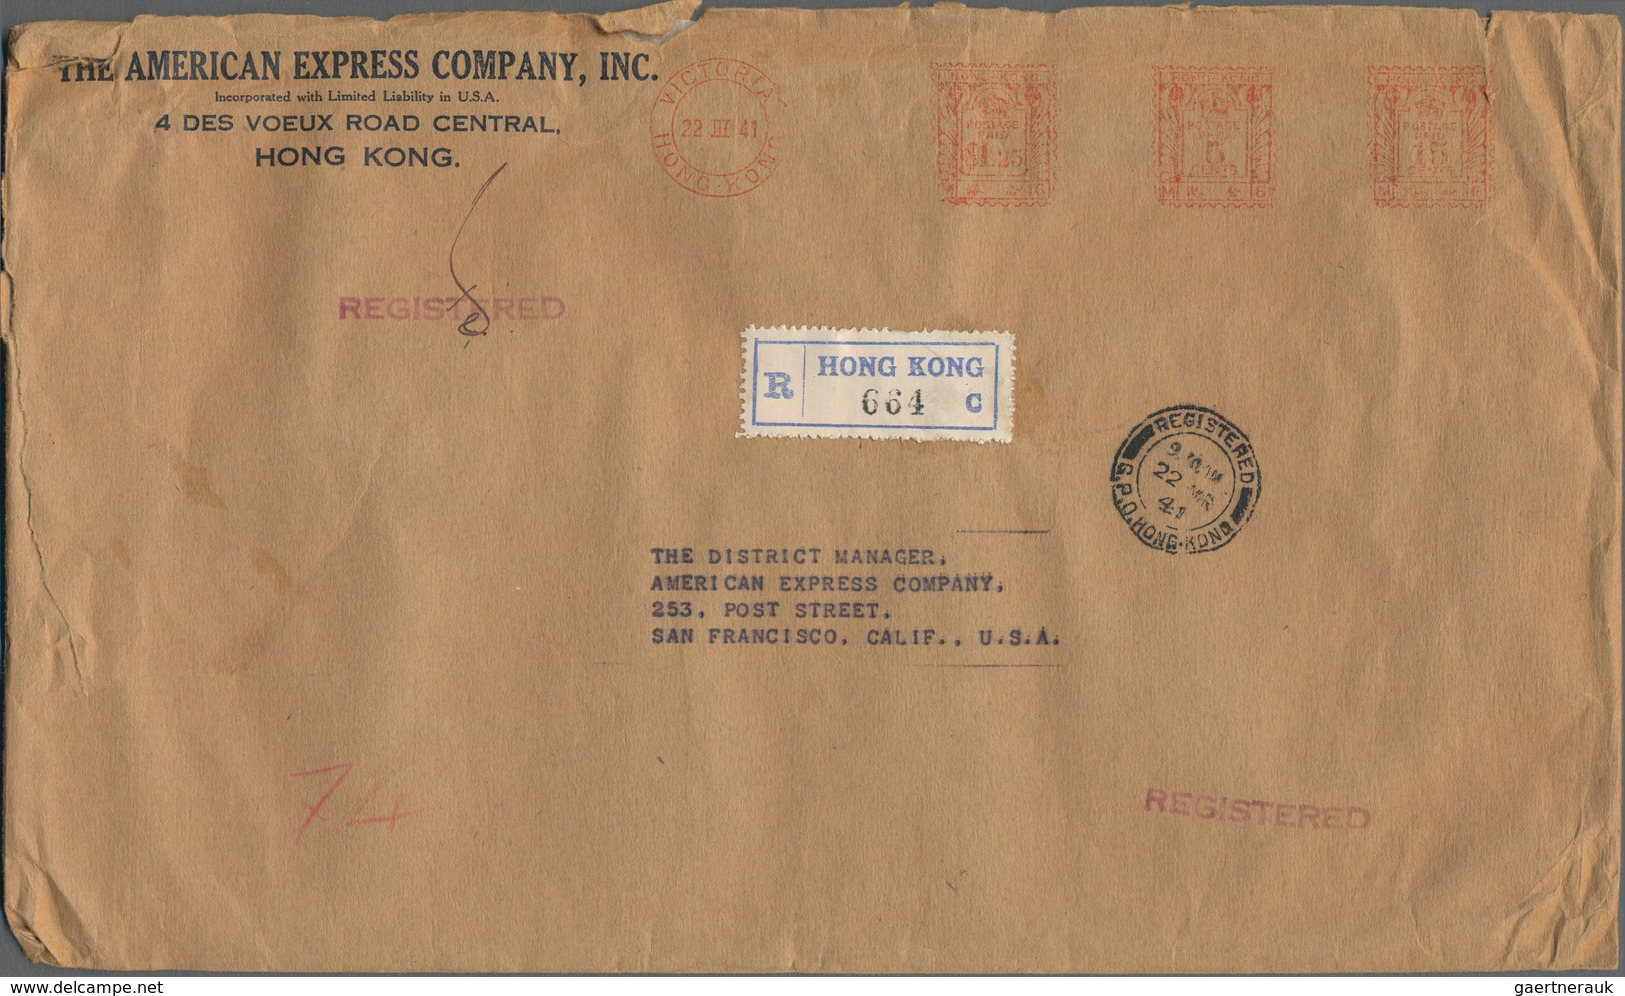 Hongkong - Besonderheiten: 1940/41, Universal Midget-meter mark covers, all registered covers from A